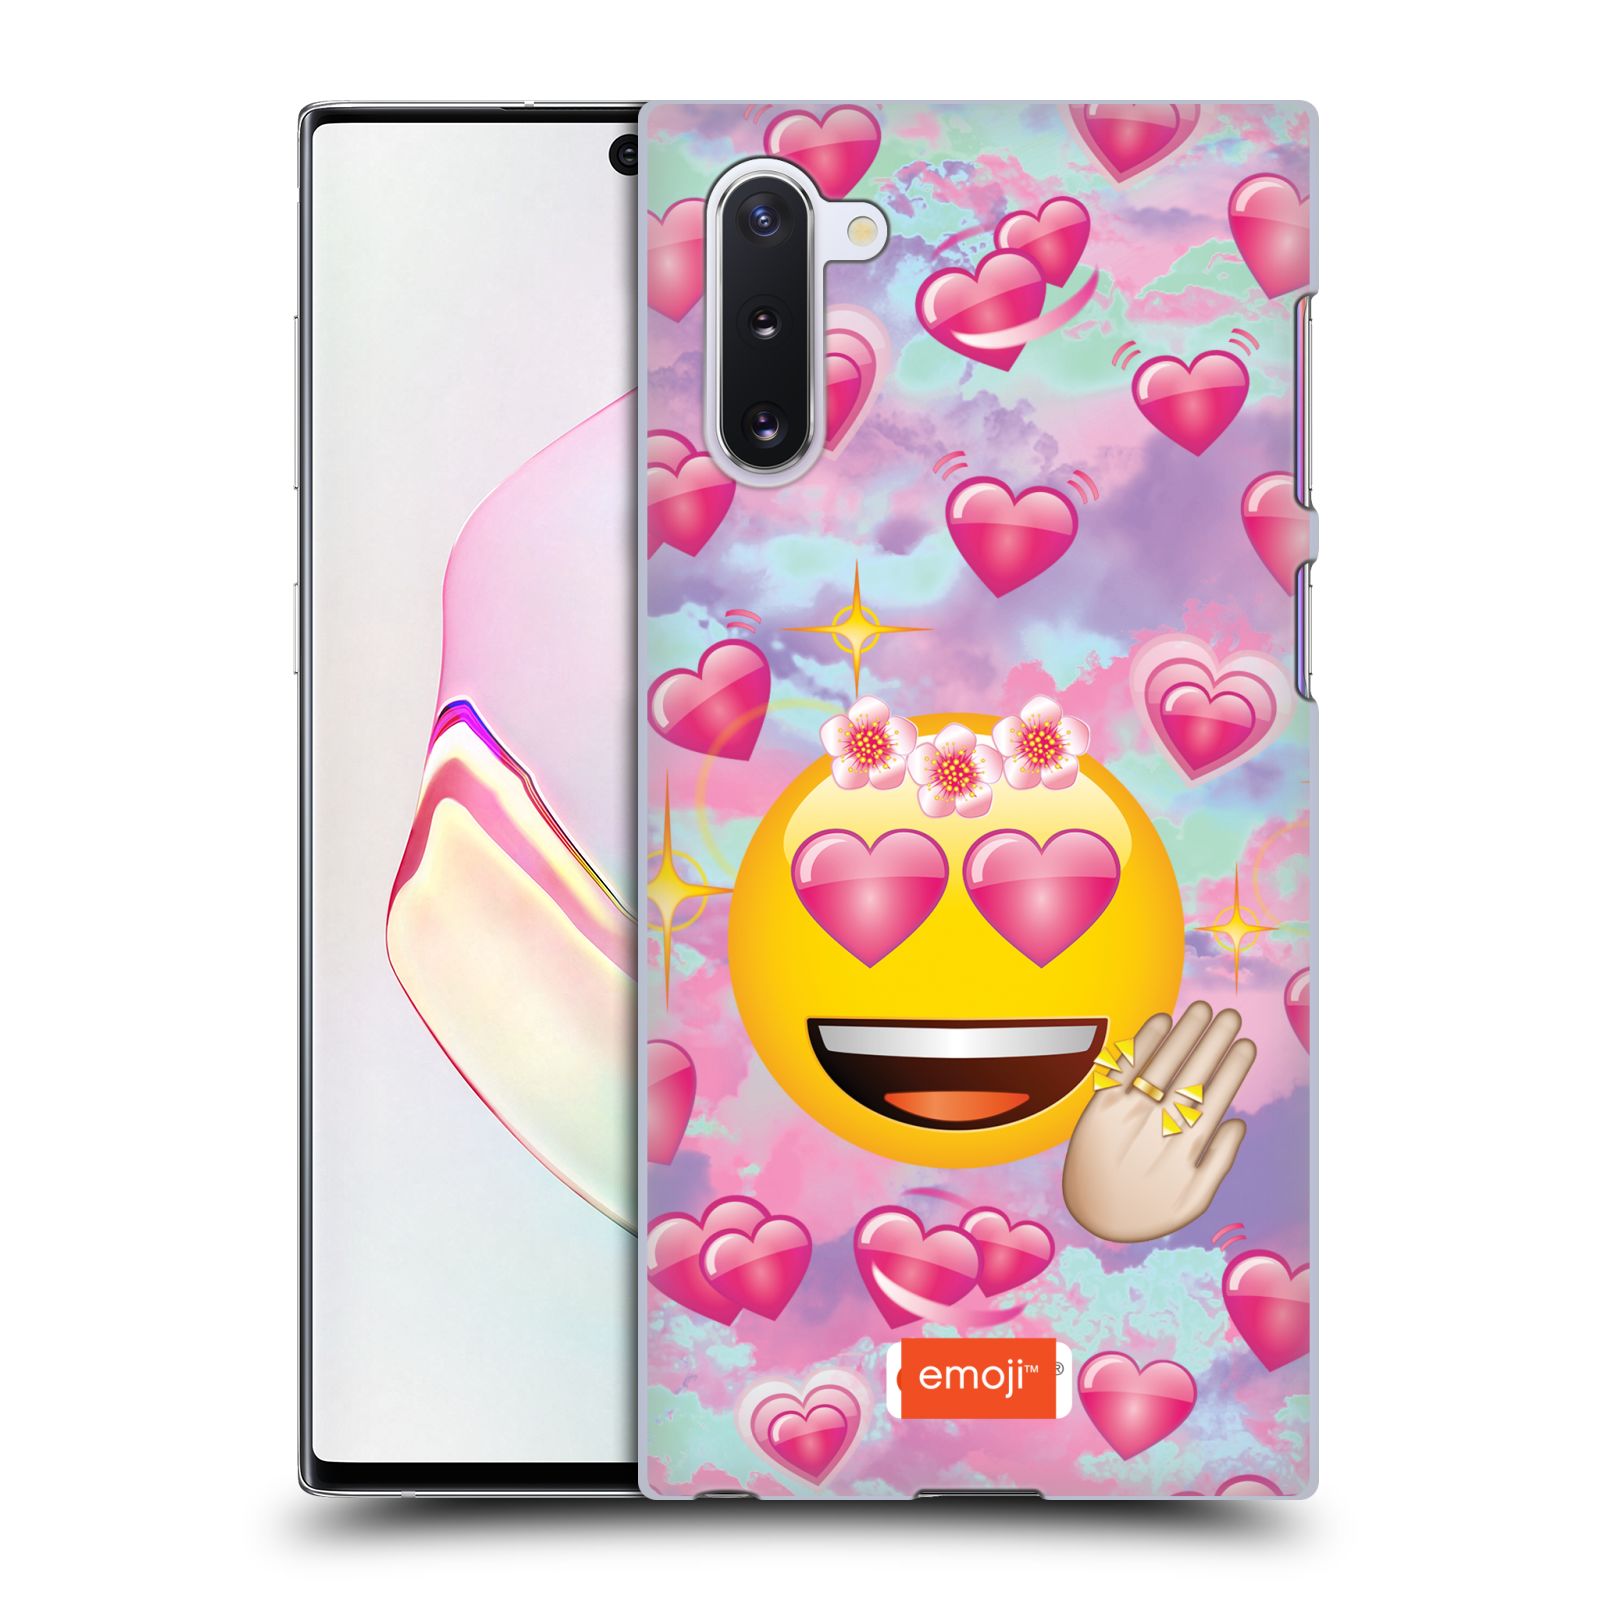 Pouzdro na mobil Samsung Galaxy Note 10 - HEAD CASE - smajlík oficiální kryt EMOJI velký smajlík růžová srdíčka